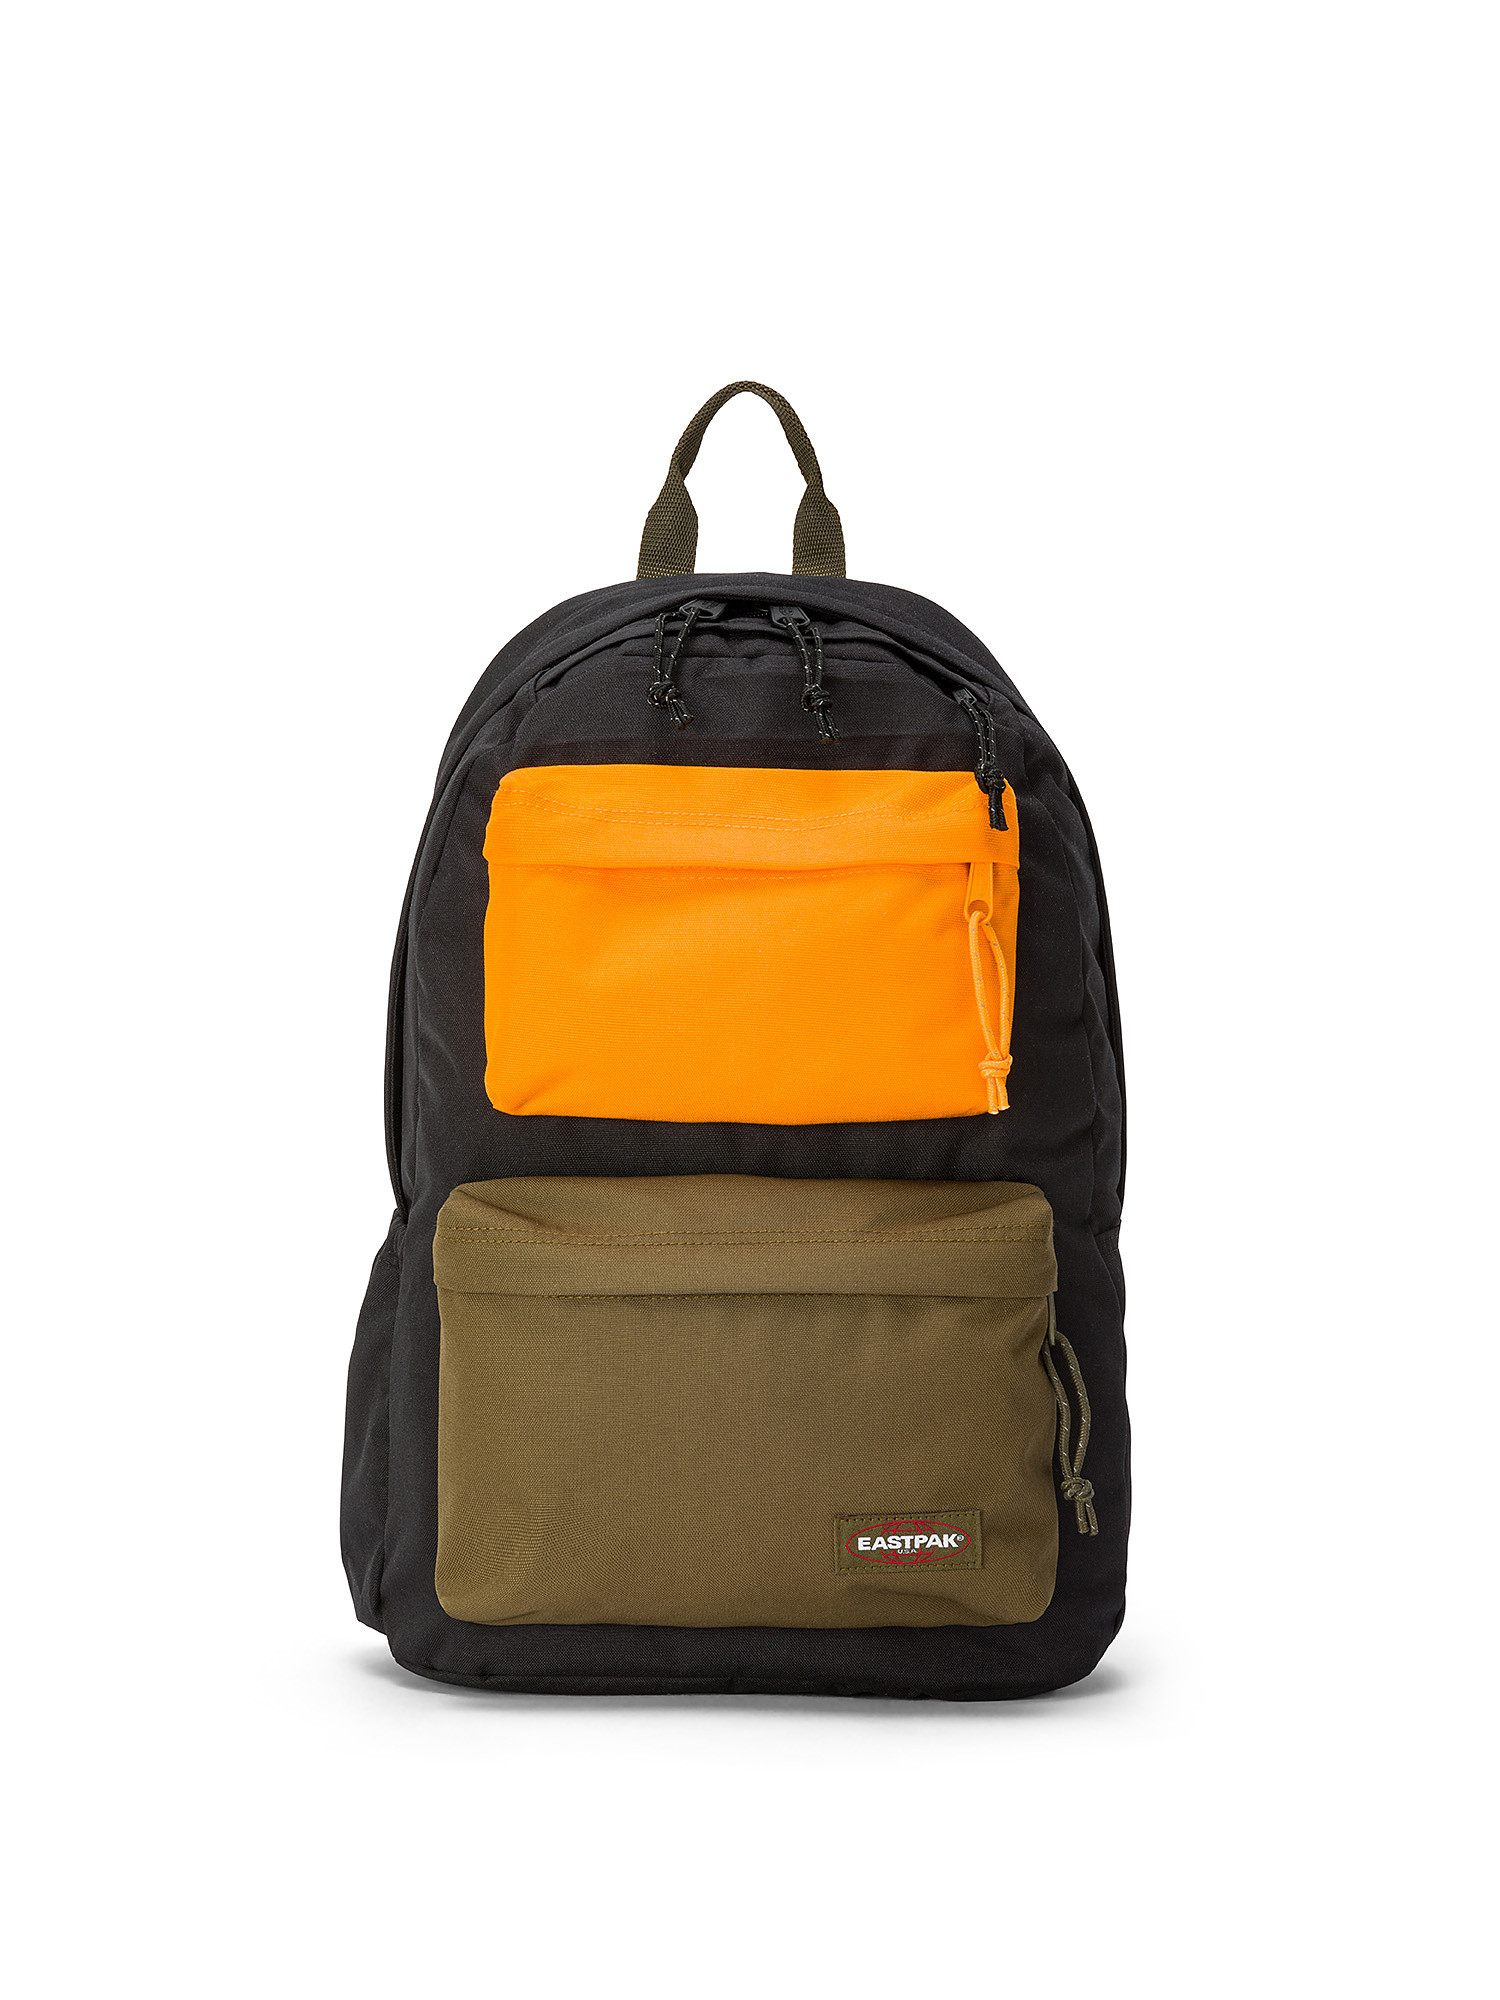 Eastpak - Padded Double Casual Blocked Backpack, Black, large image number 0